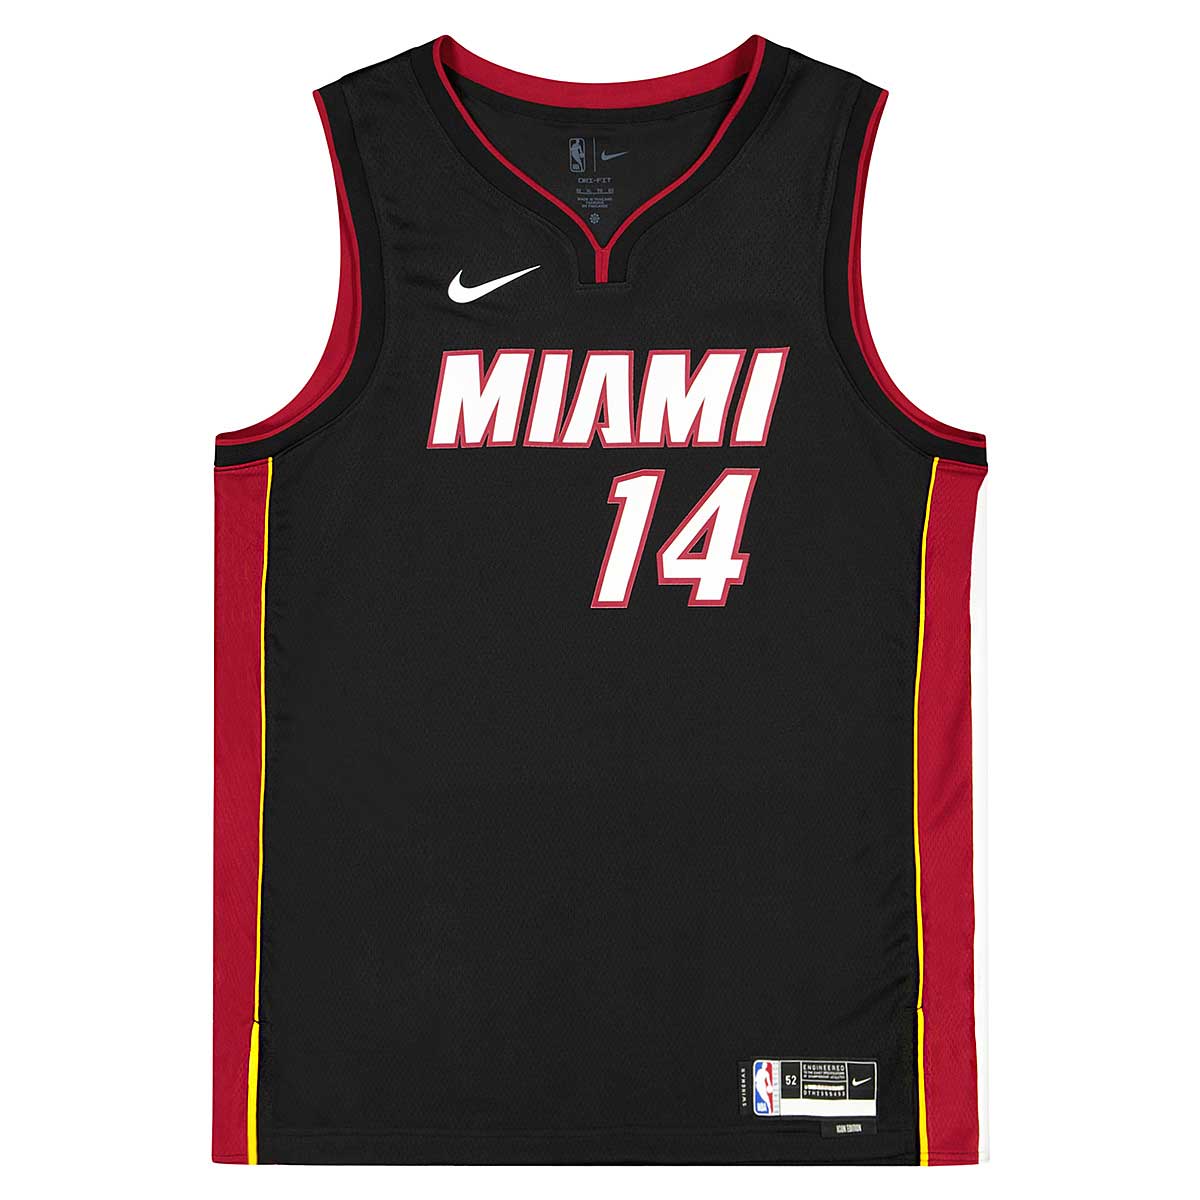 NBA Men's Miami Heat LeBron James Black-Black-White Swingman